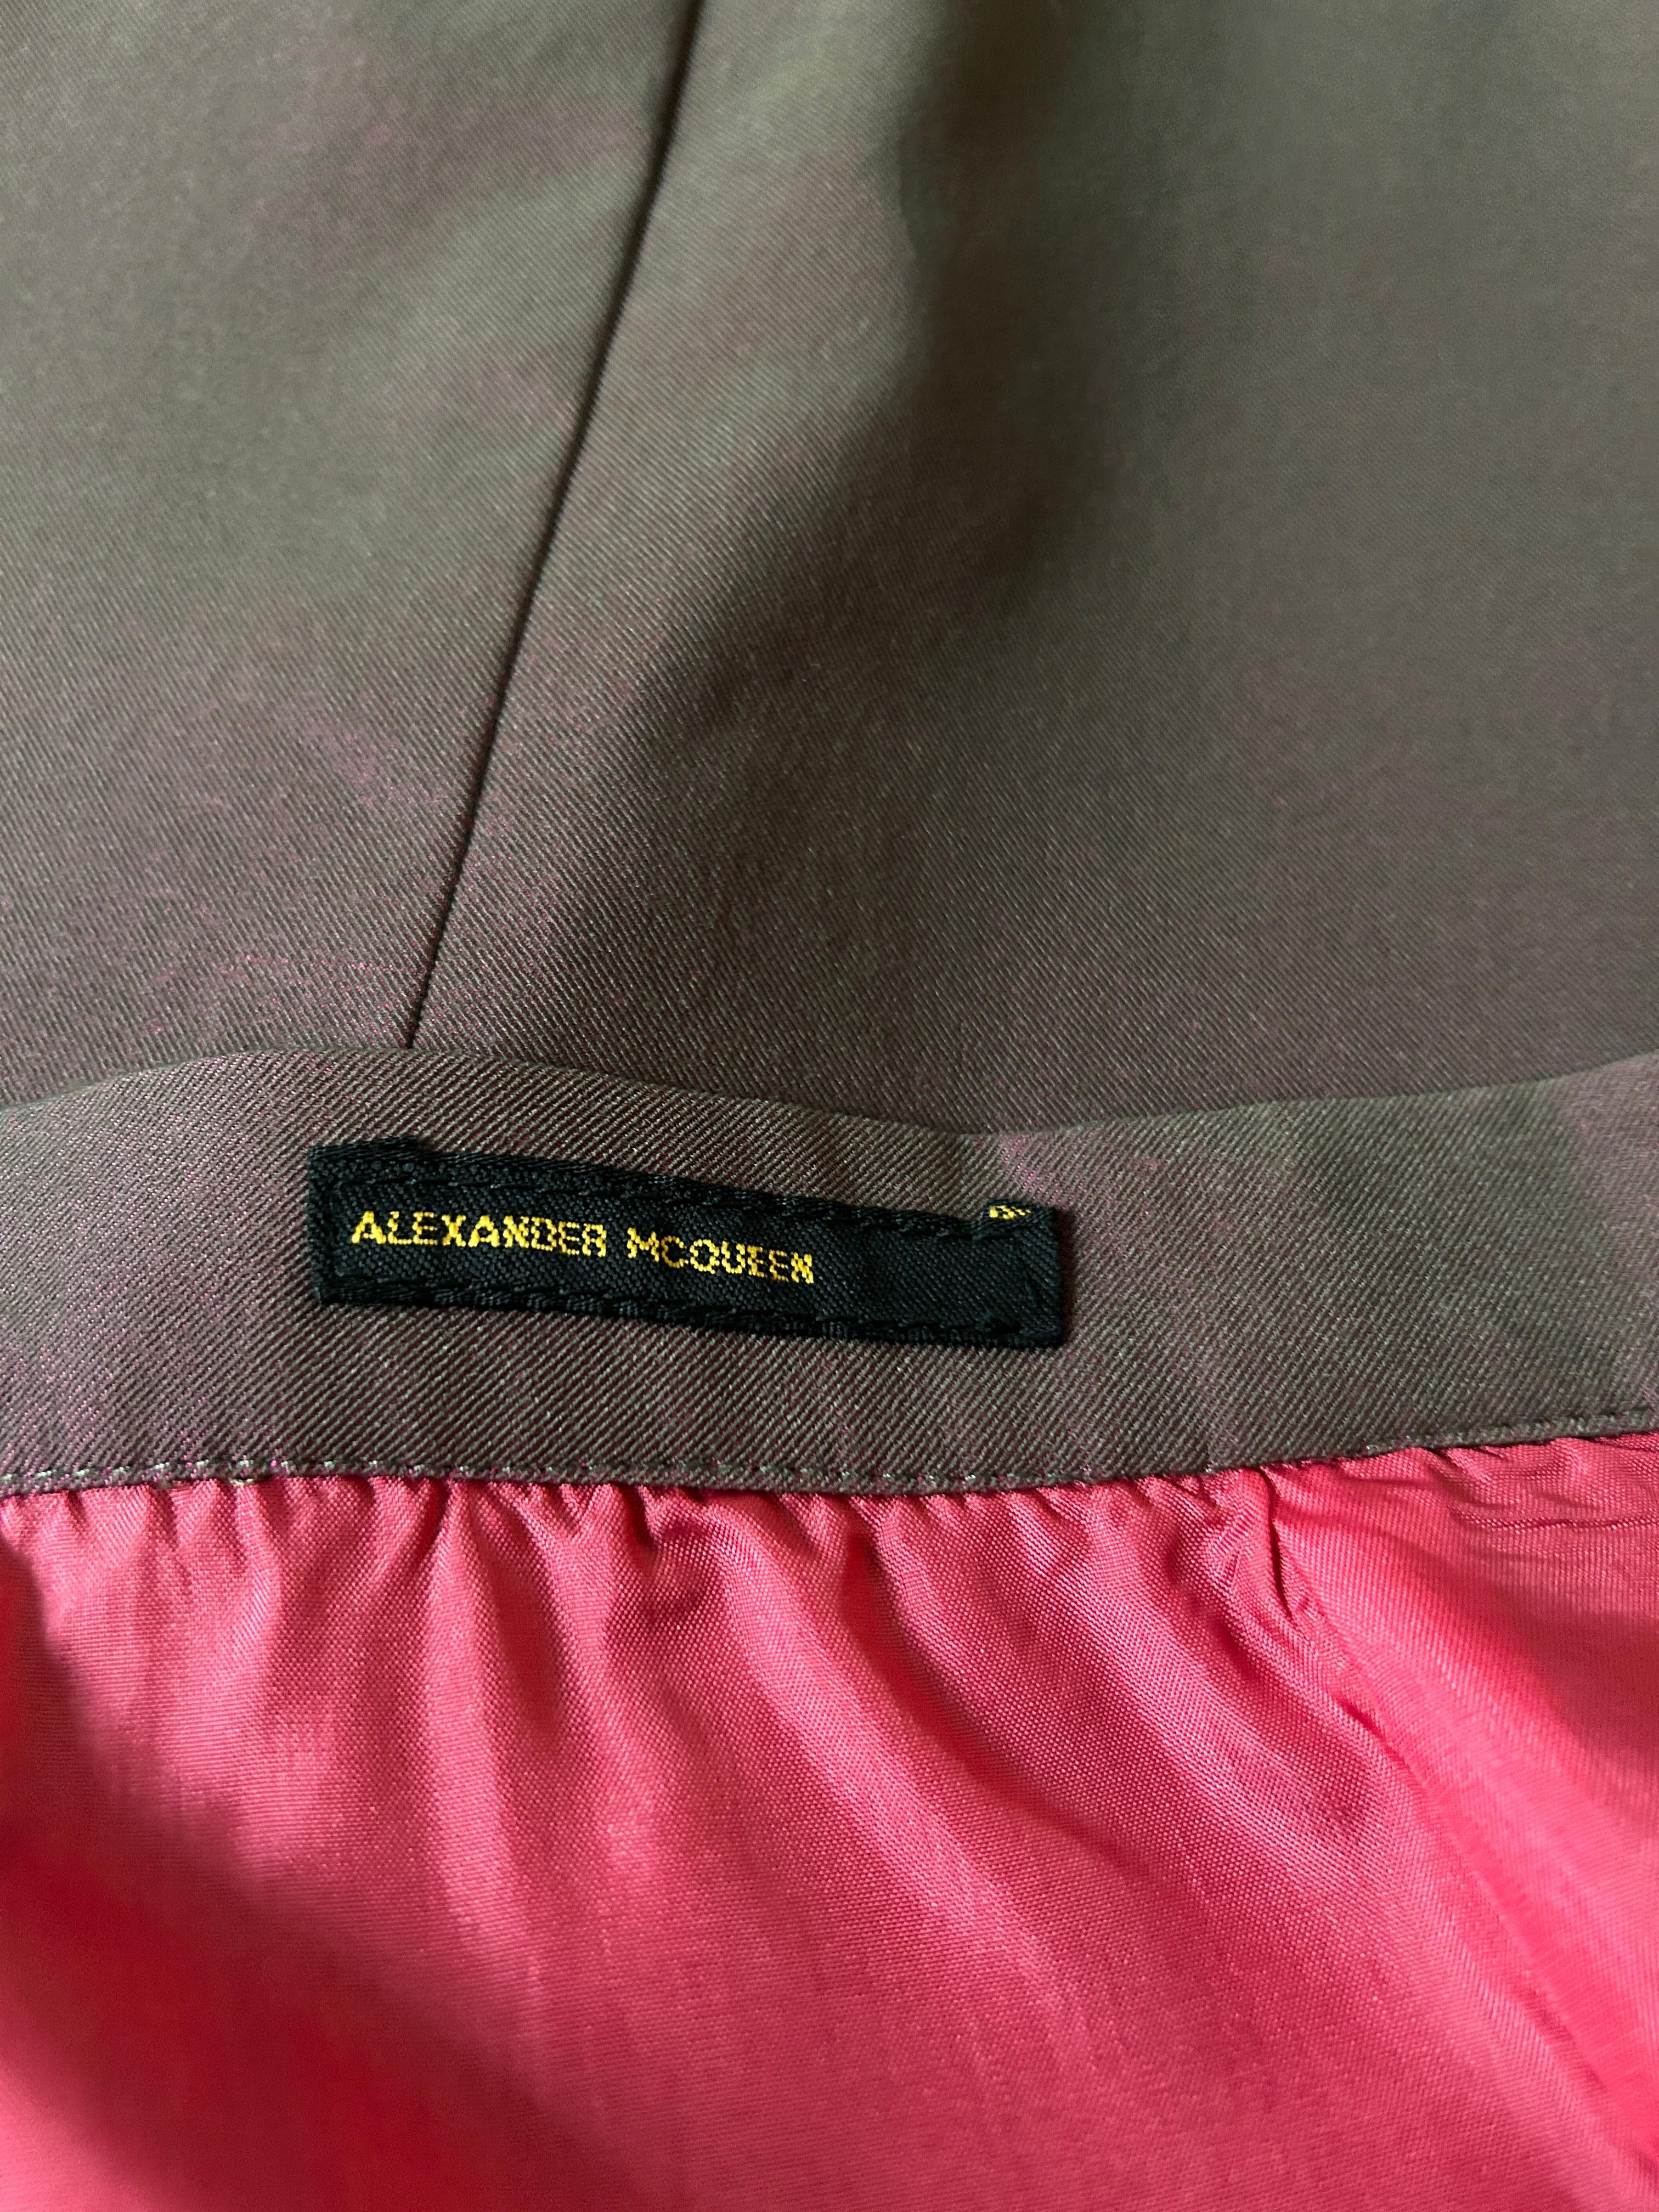 Women's Alexander McQueen Vintage 1990s Grayish Red Pencil Skirt For Sale